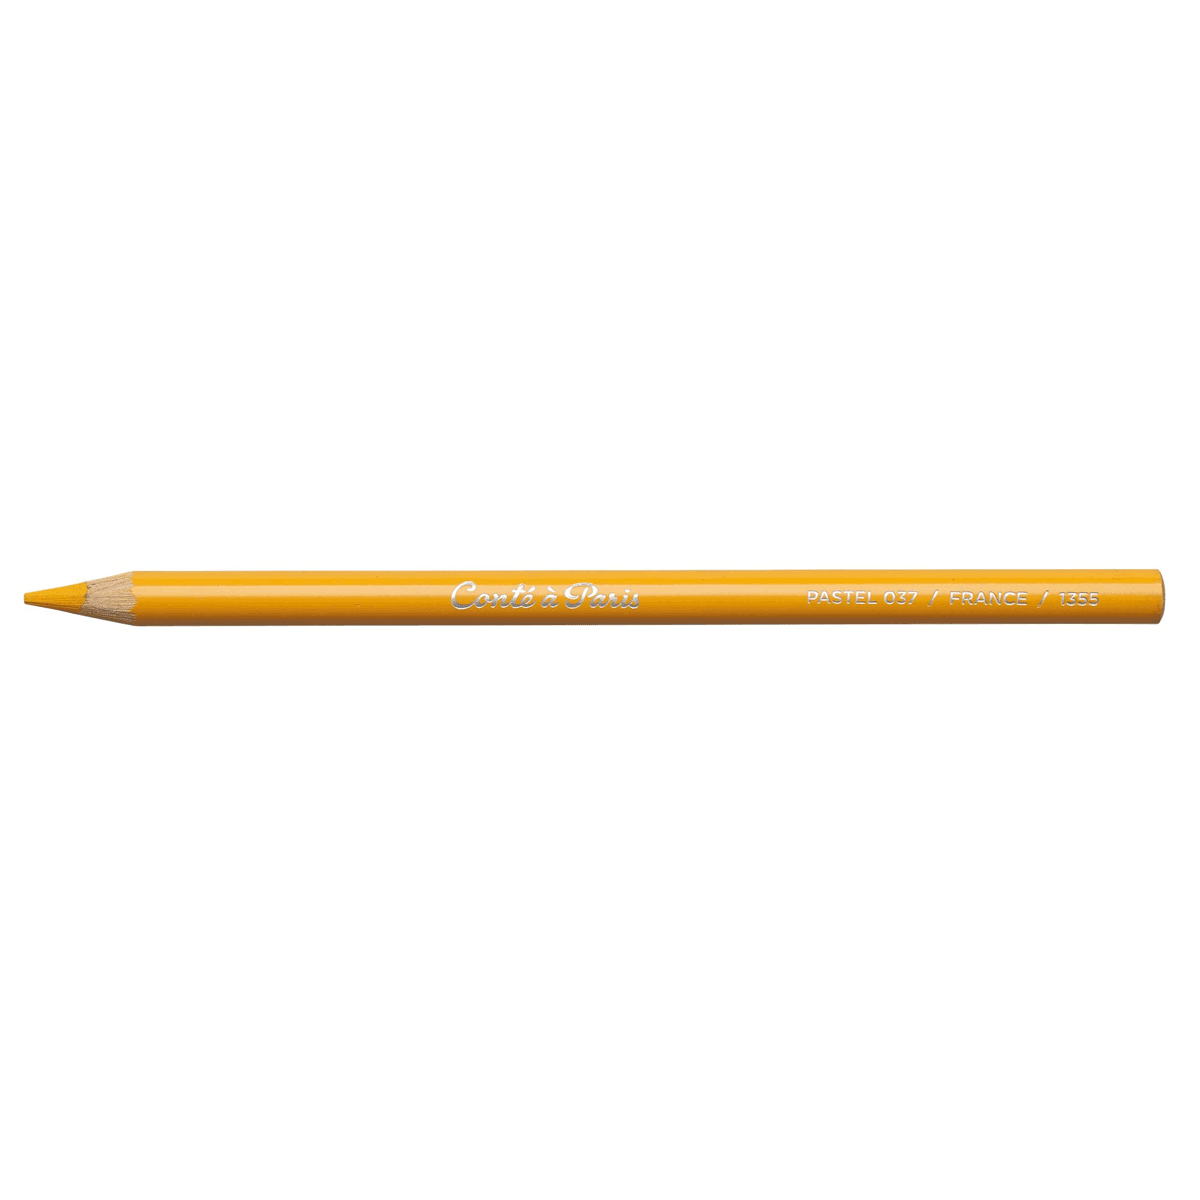 Conte Pastel Pencil - Indian Yellow- 037